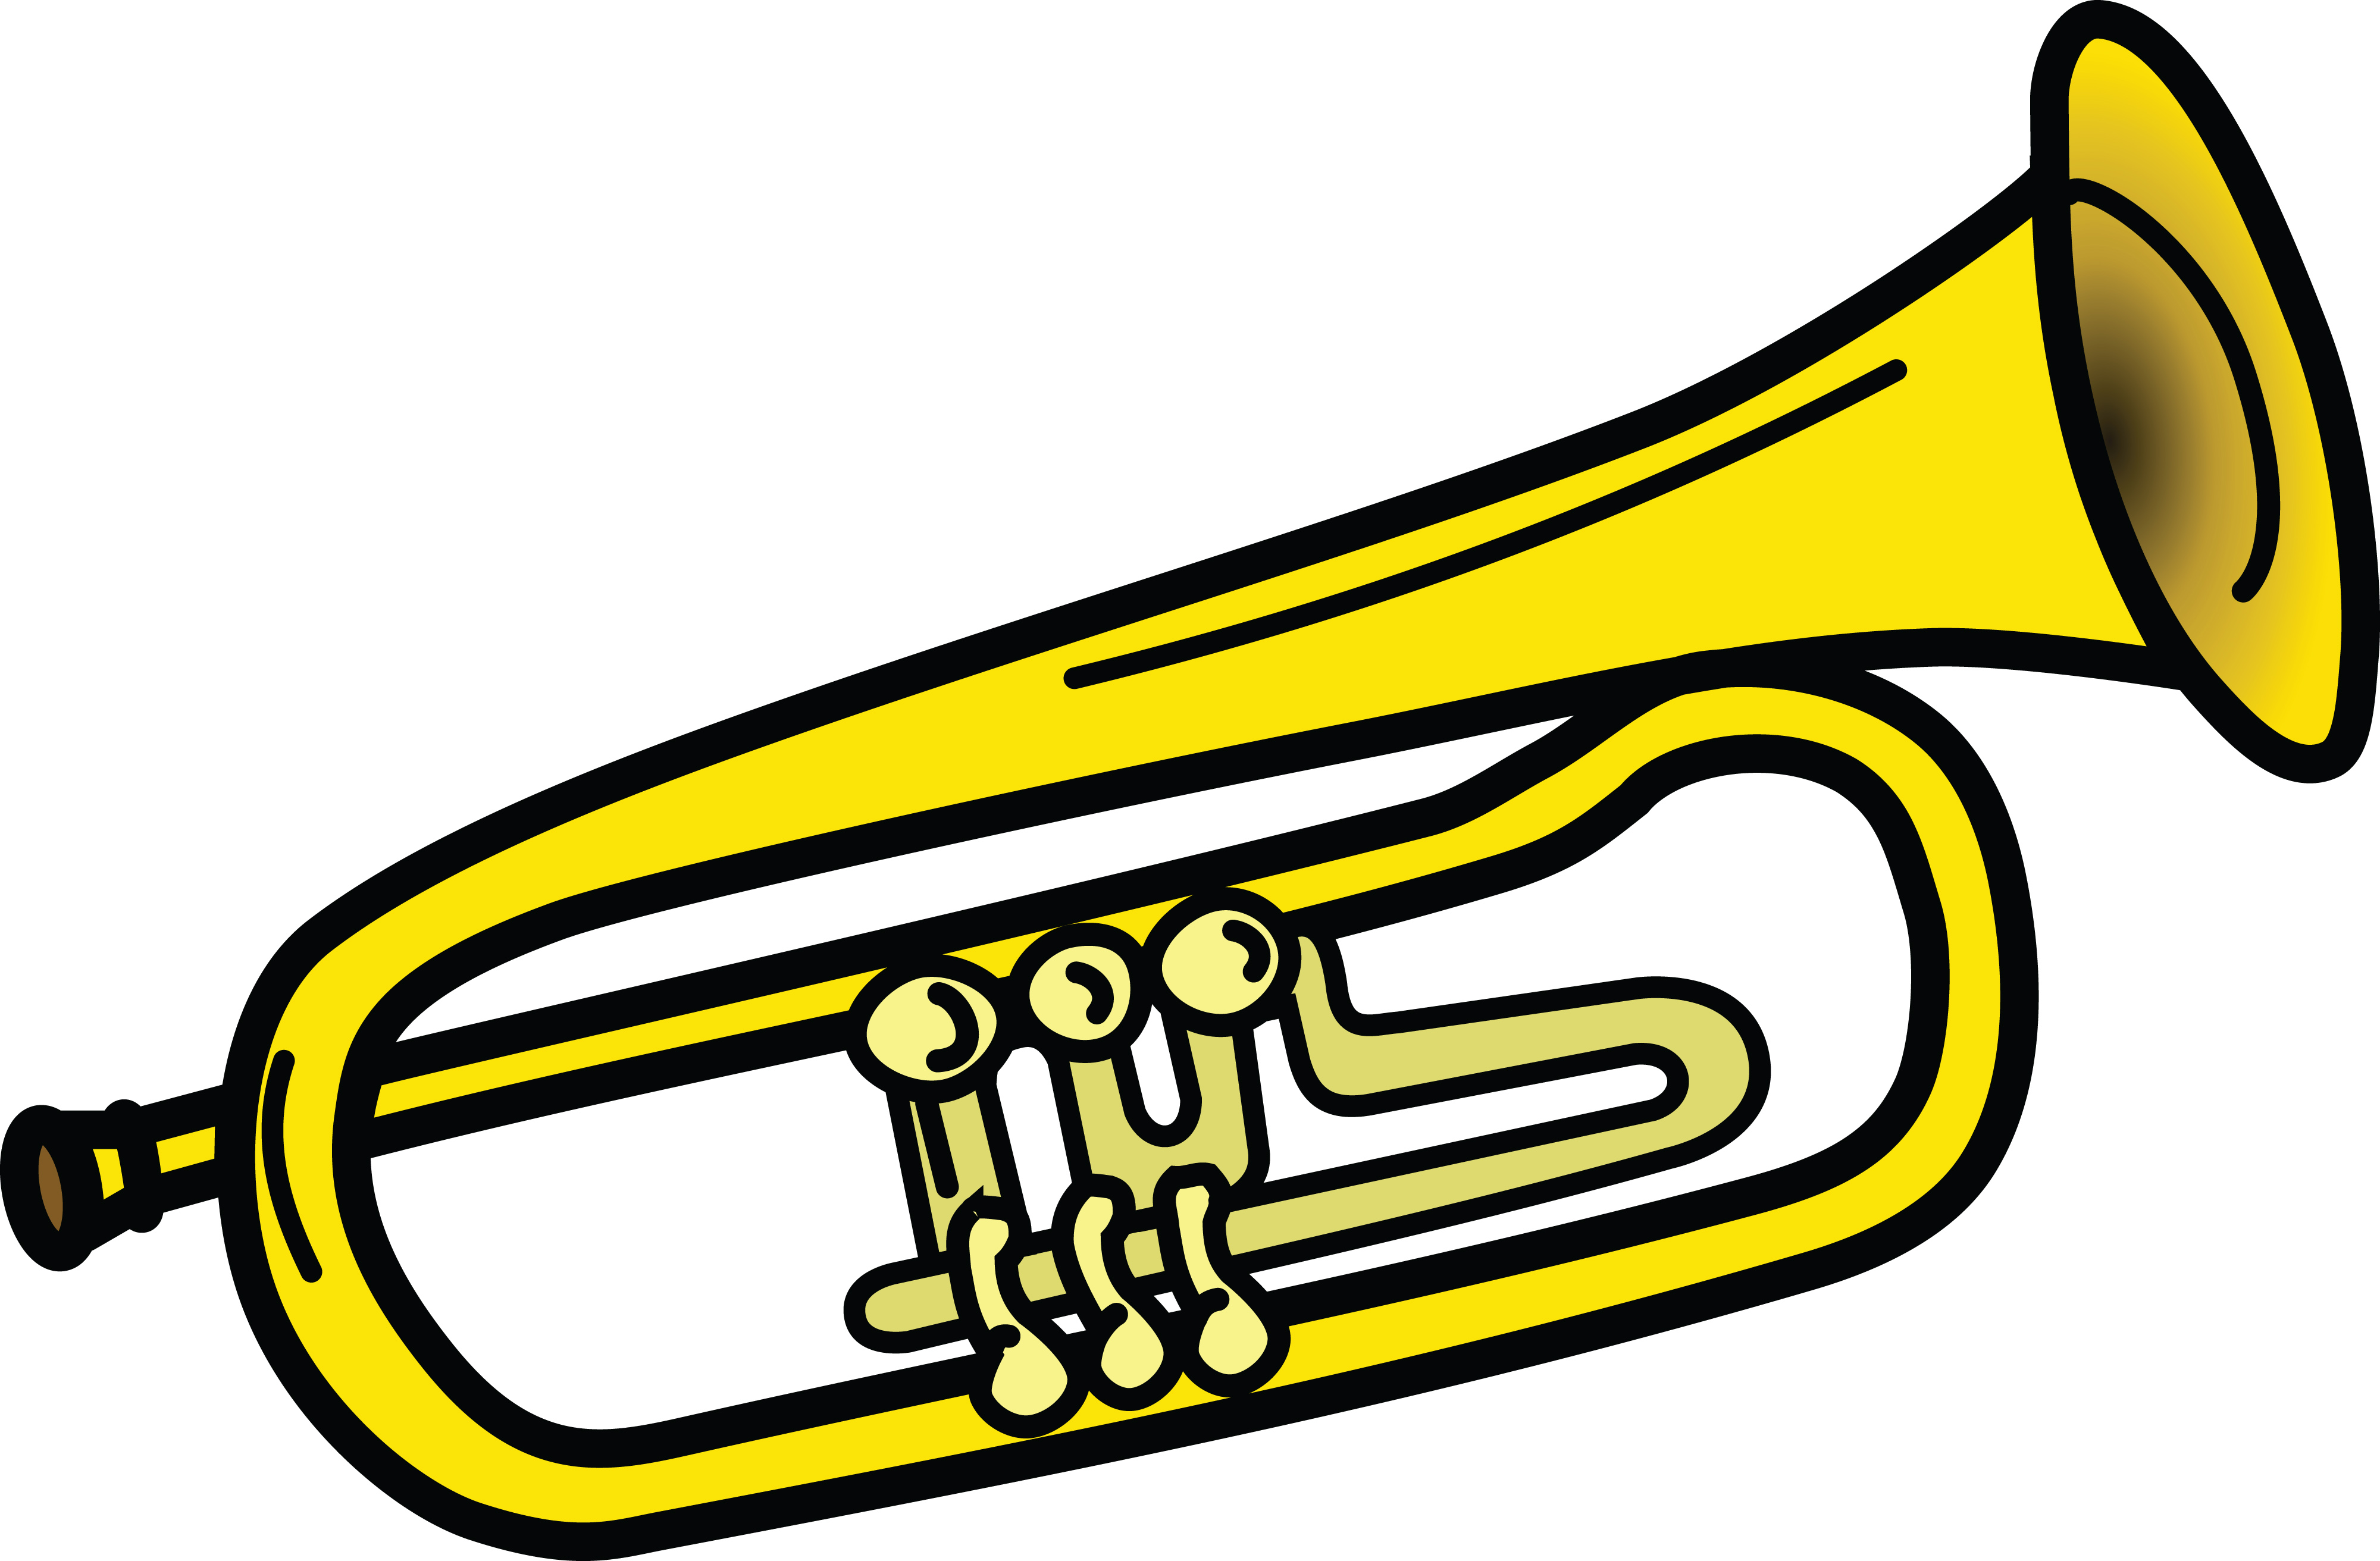 trumpet illustration free download